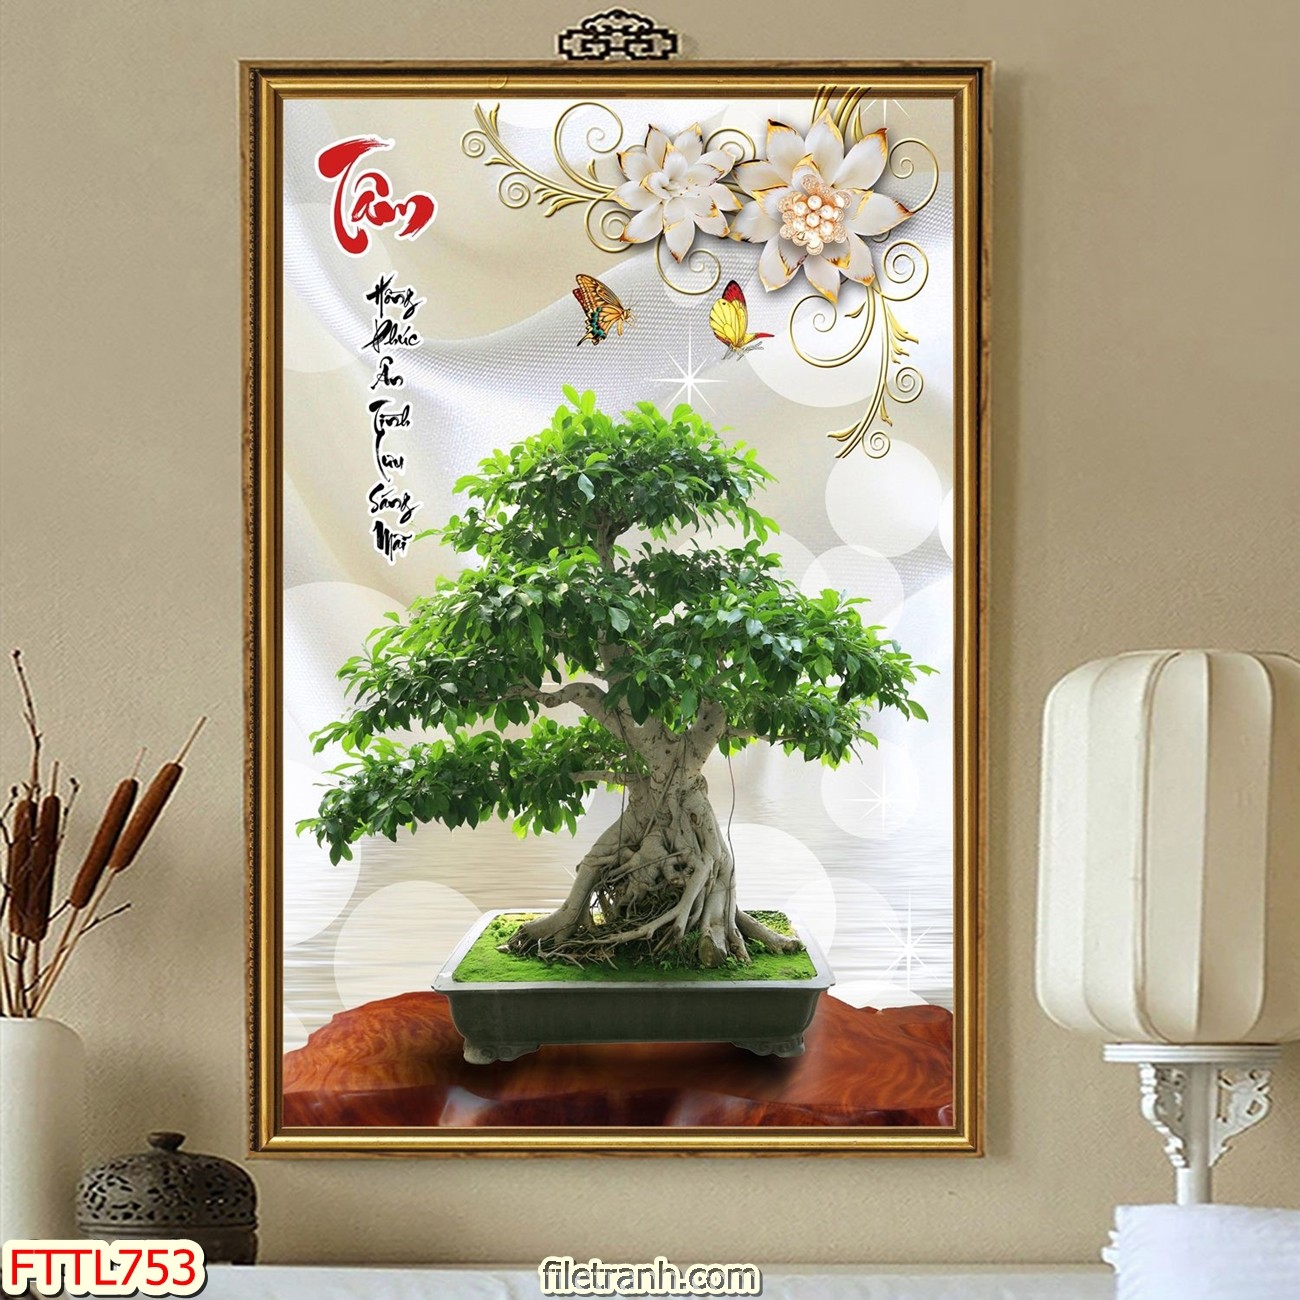 https://filetranh.com/file-tranh-chau-mai-bonsai/file-tranh-chau-mai-bonsai-fttl753.html